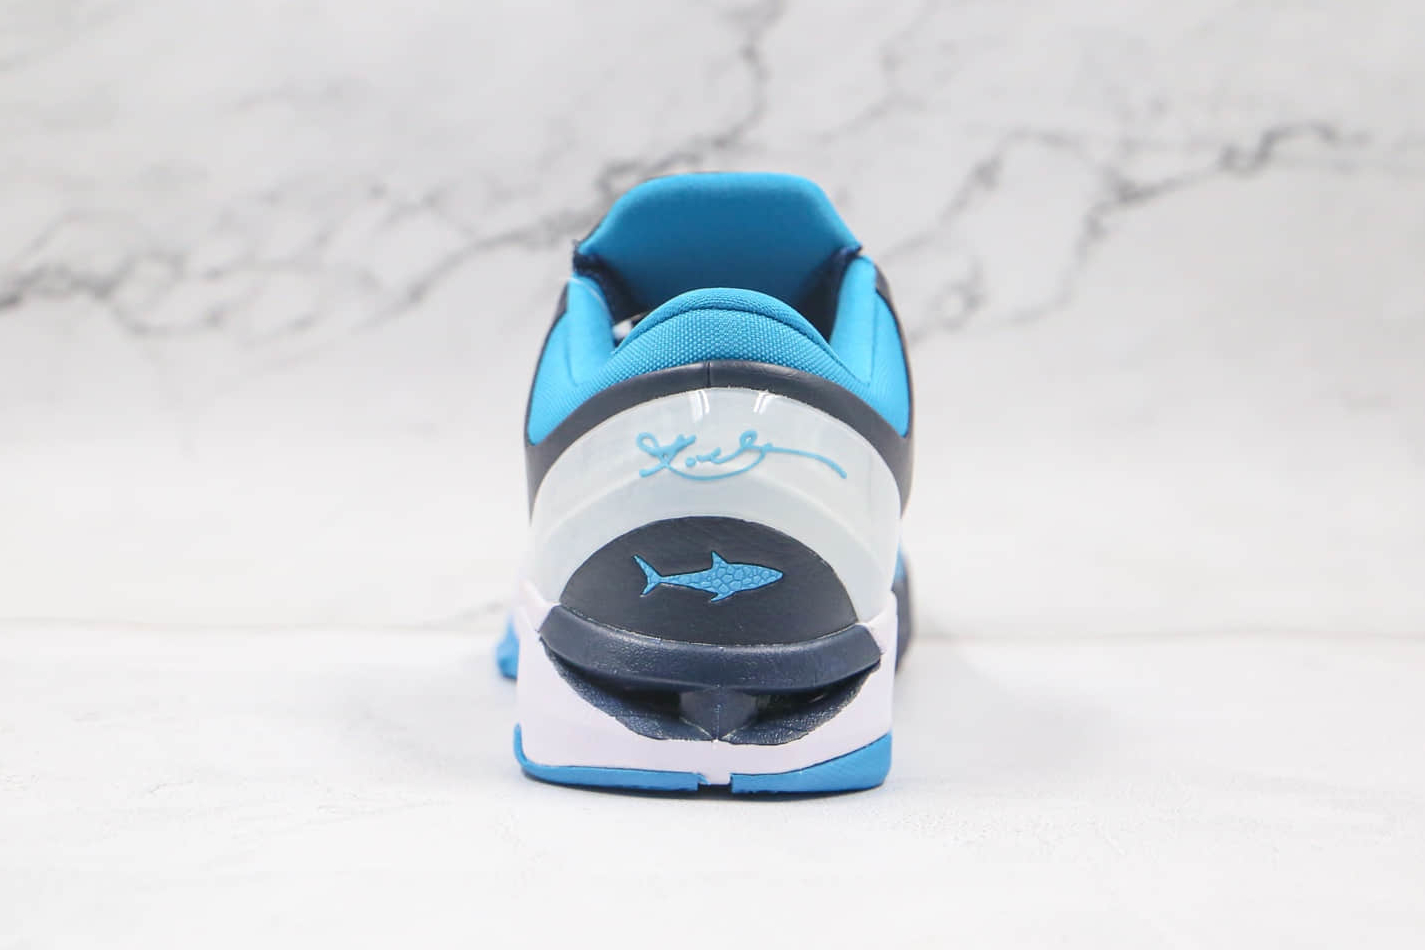 Nike Zoom Kobe 7 System 'Shark' 488371-401 – High-performance basketball shoes